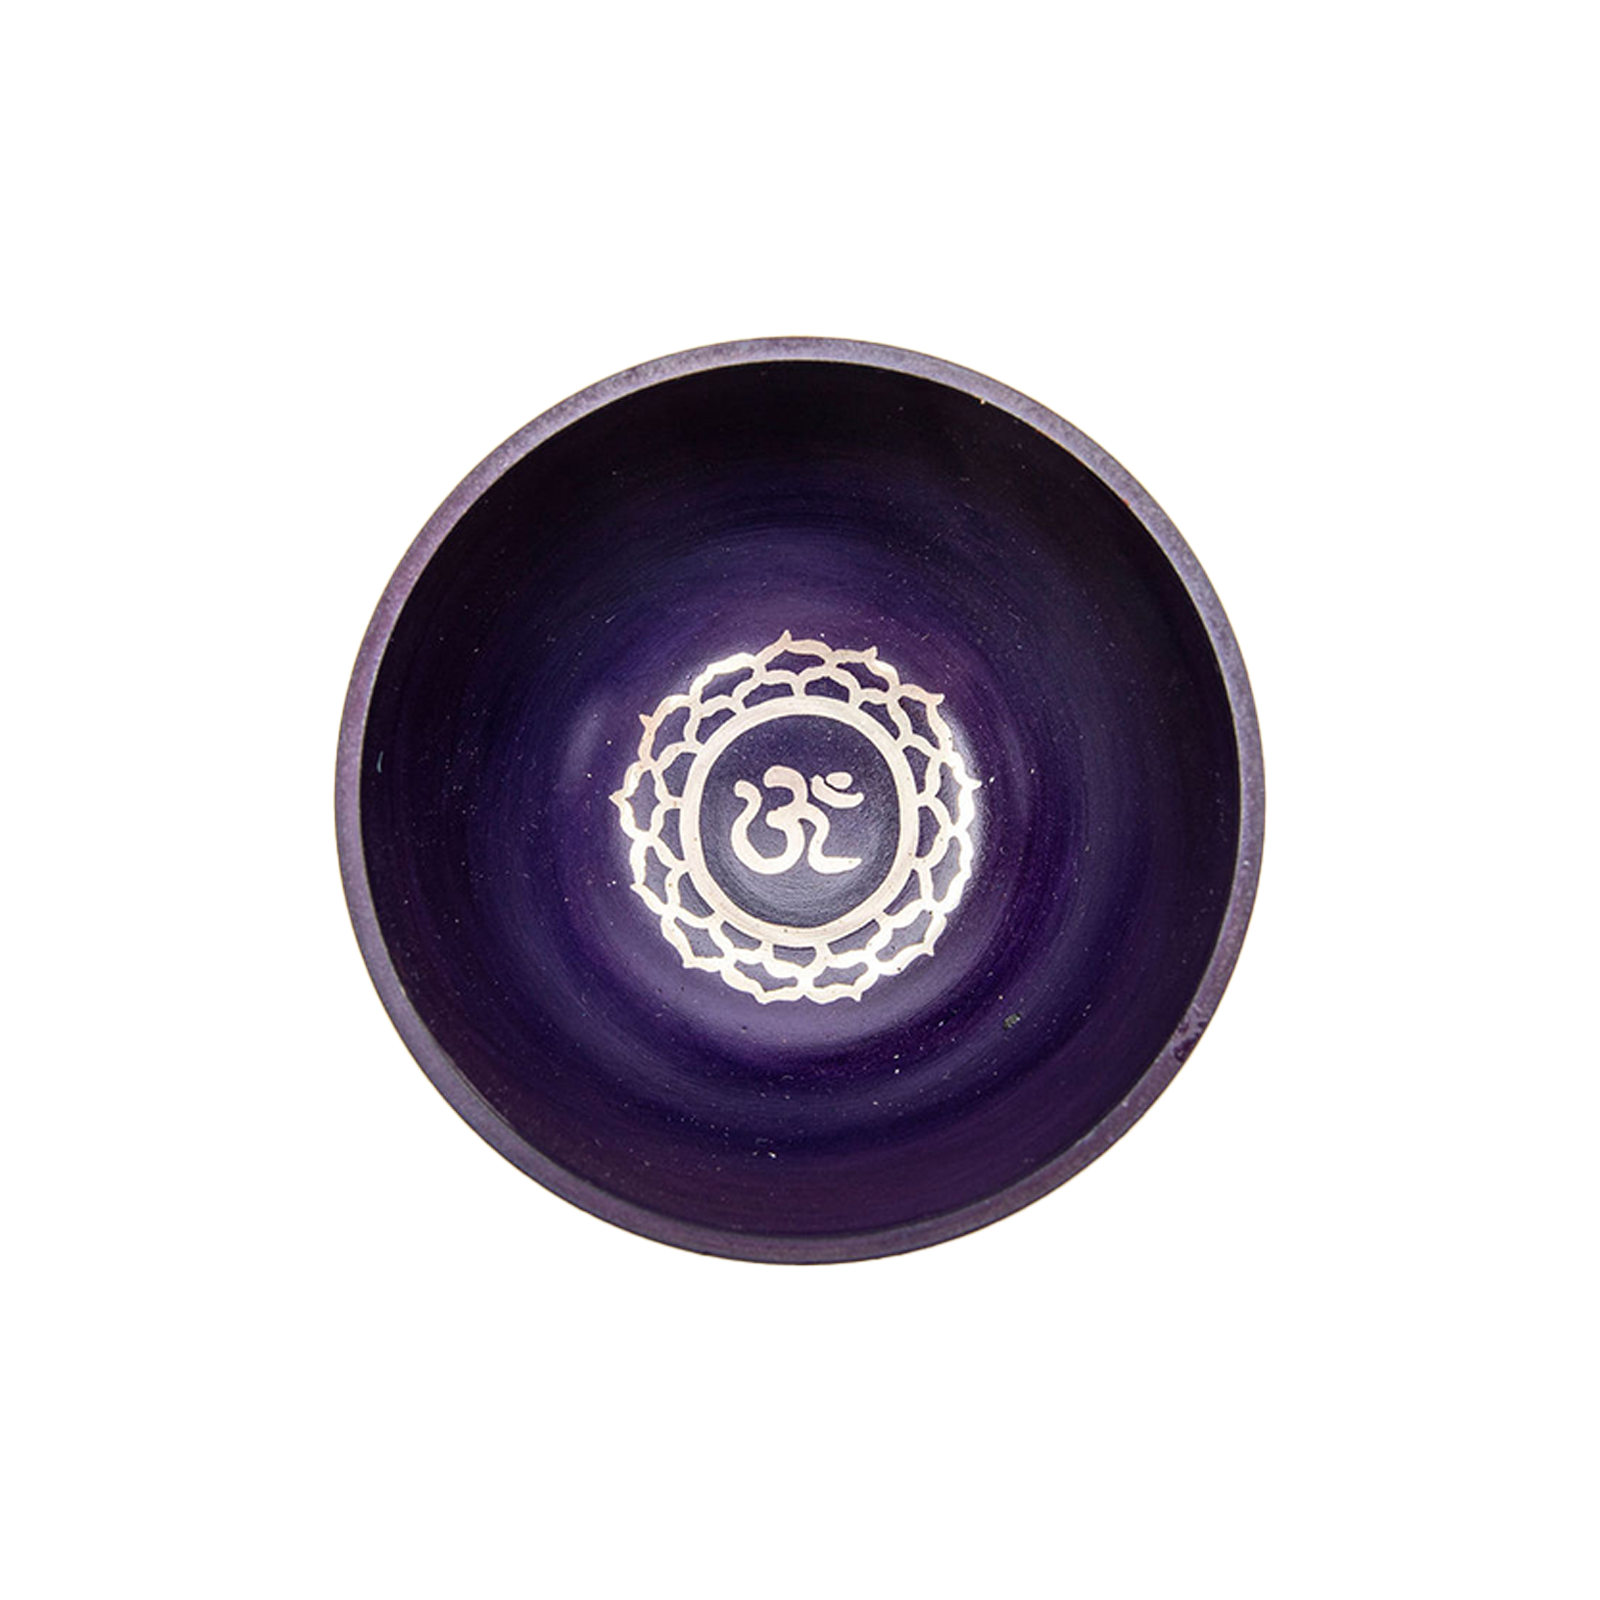 Inside view of the violet chakra (crown chakra) bowl on a white backdrop.